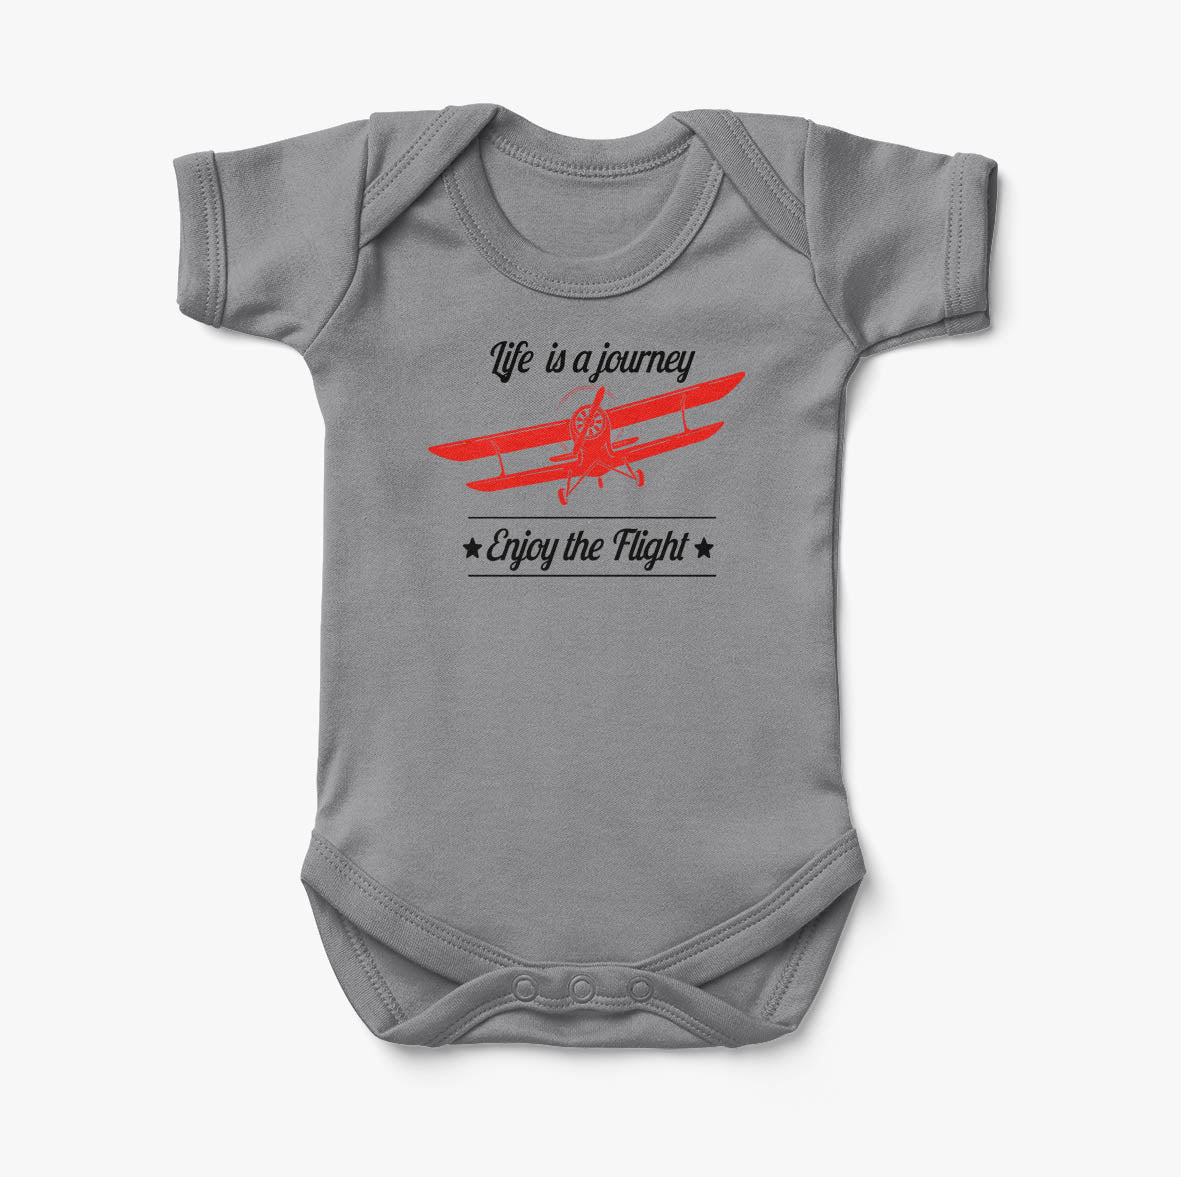 Life is a journey Enjoy the Flight Designed Baby Bodysuits